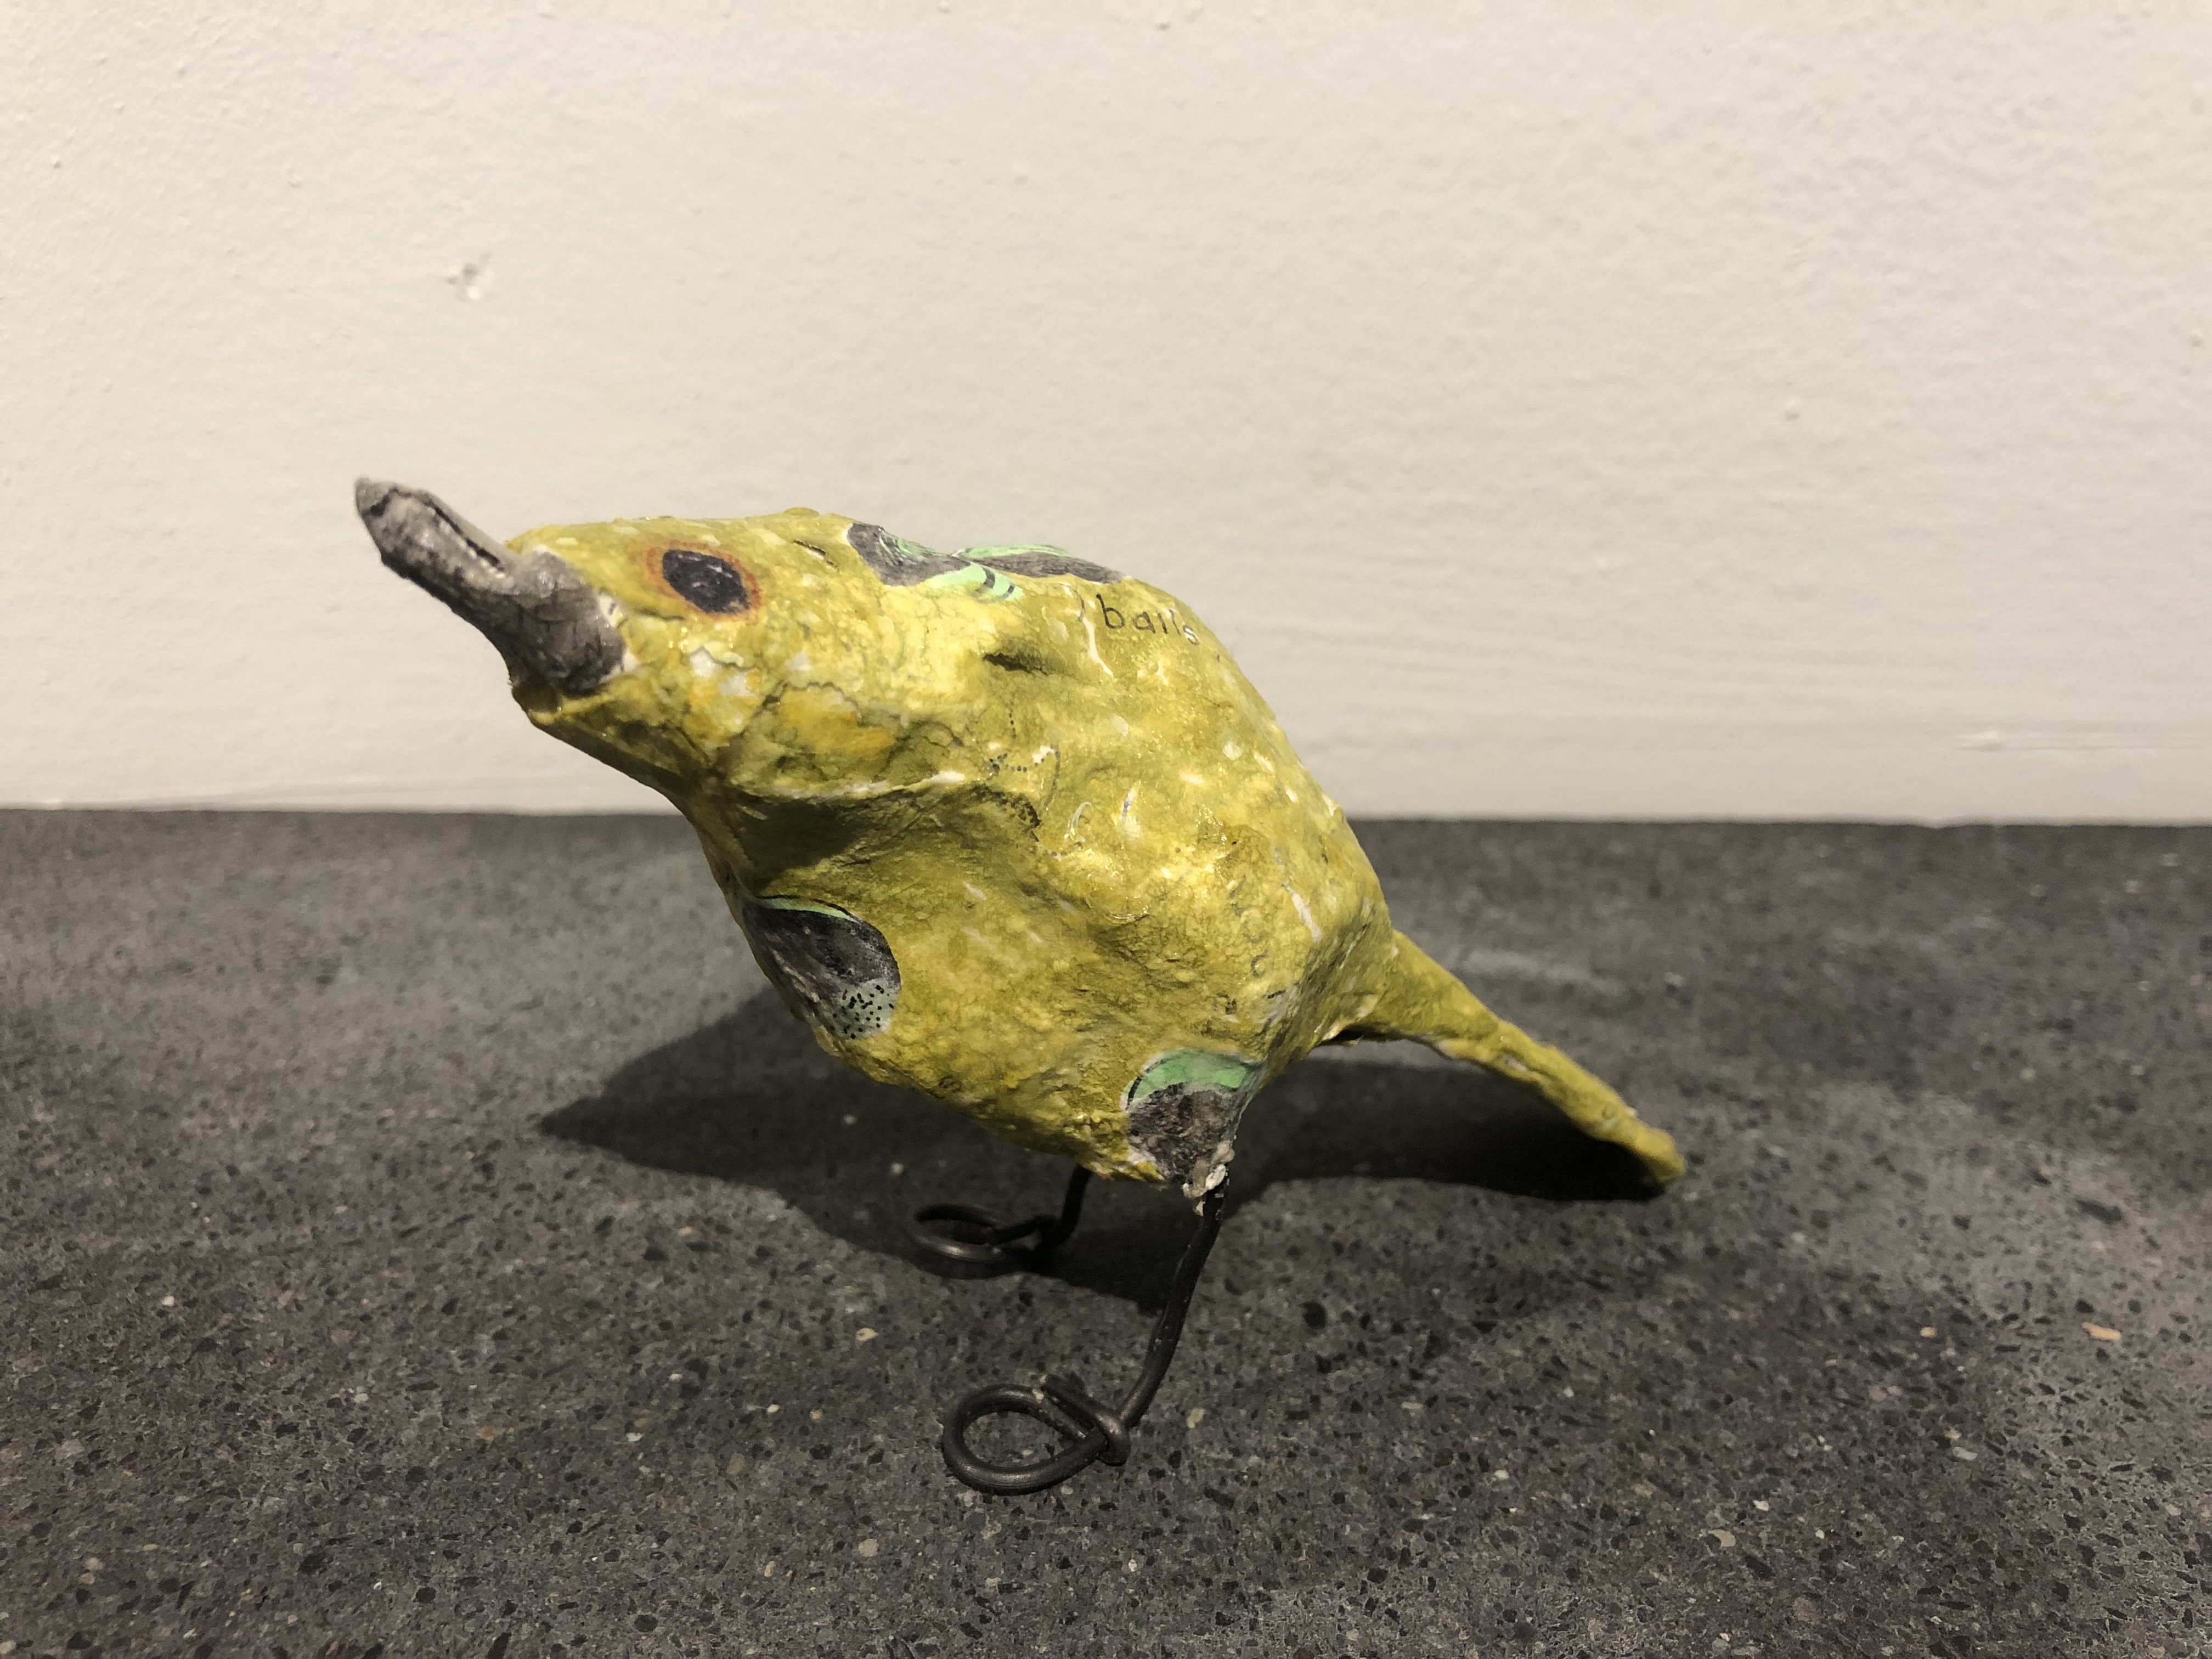 Yellow bird with grey beak hunched down.